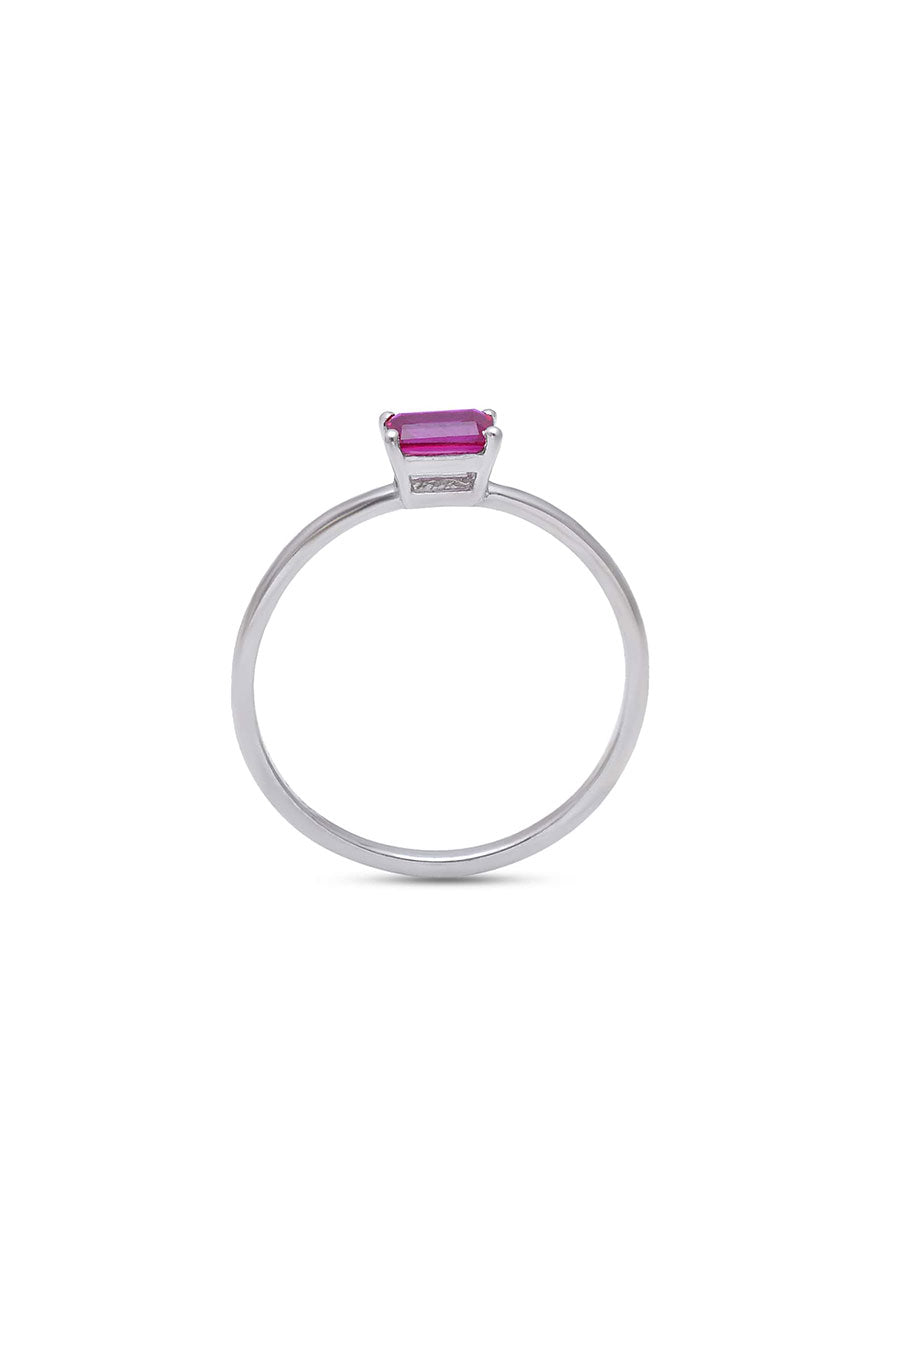 Ruby Birthstone Baguette Ring in 925 Silver